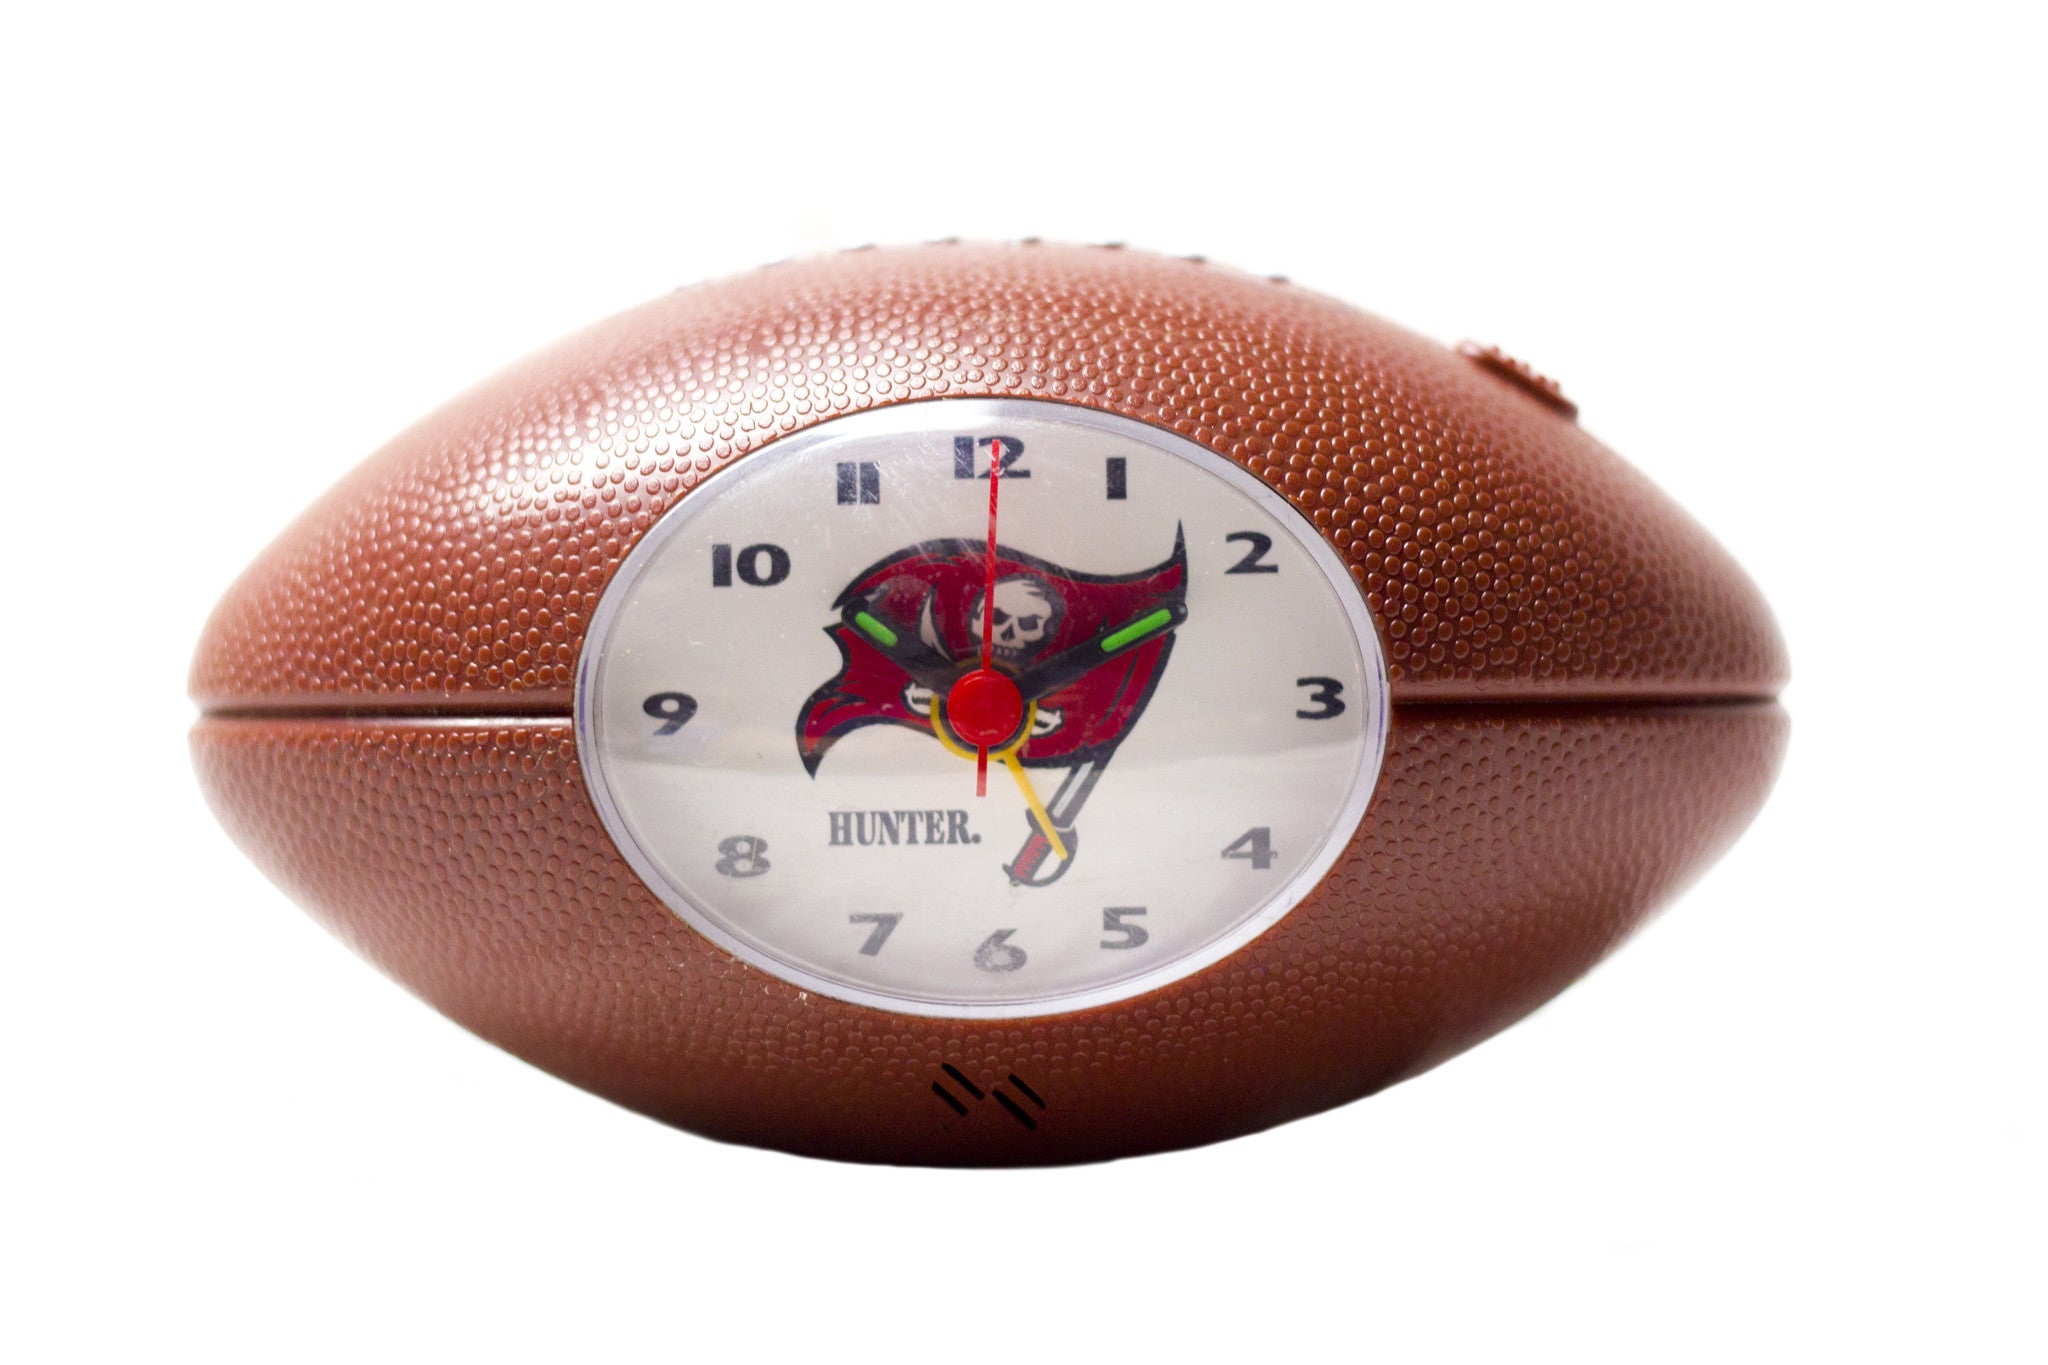 Officially licensed Tampa Bay Buccaneersteam NFLsports alarm clock